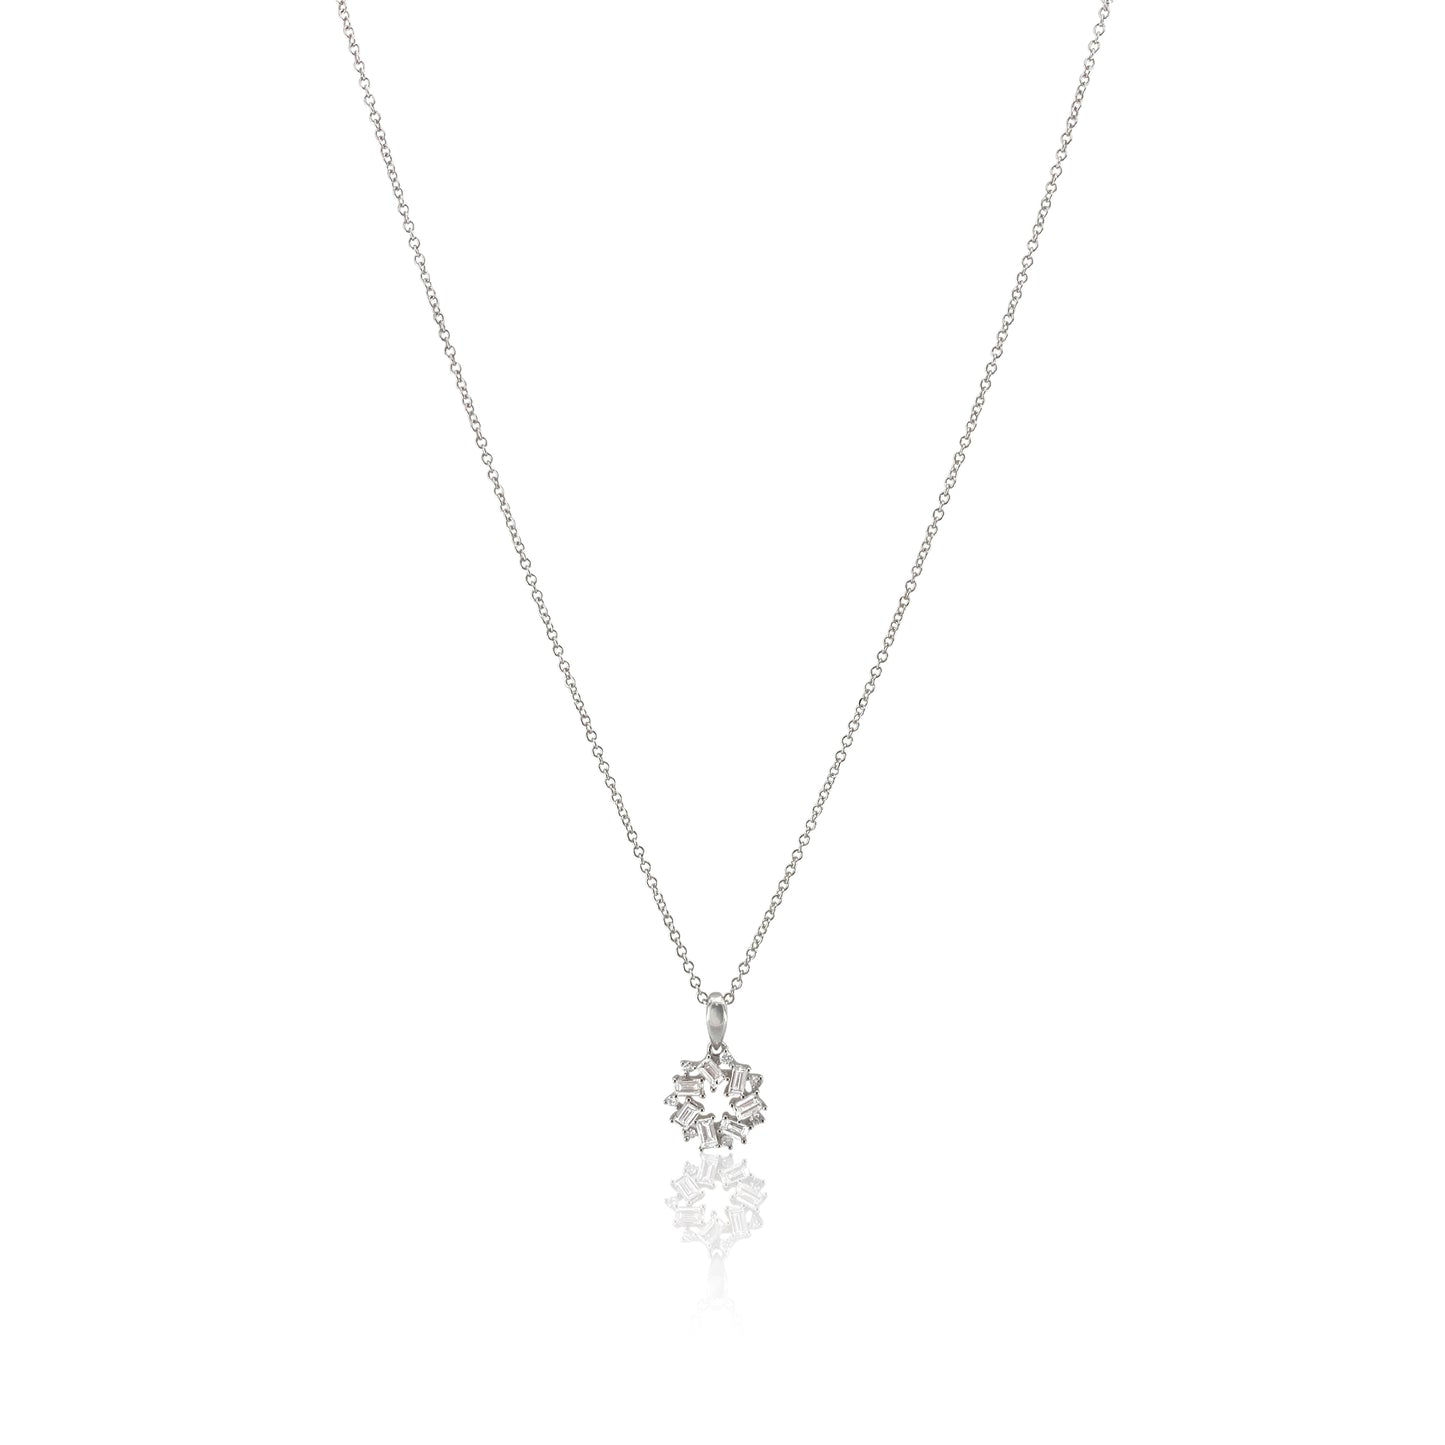 San Antonio Jewelry baguette diamond pendant with round diamond accents in 18k white gold. 